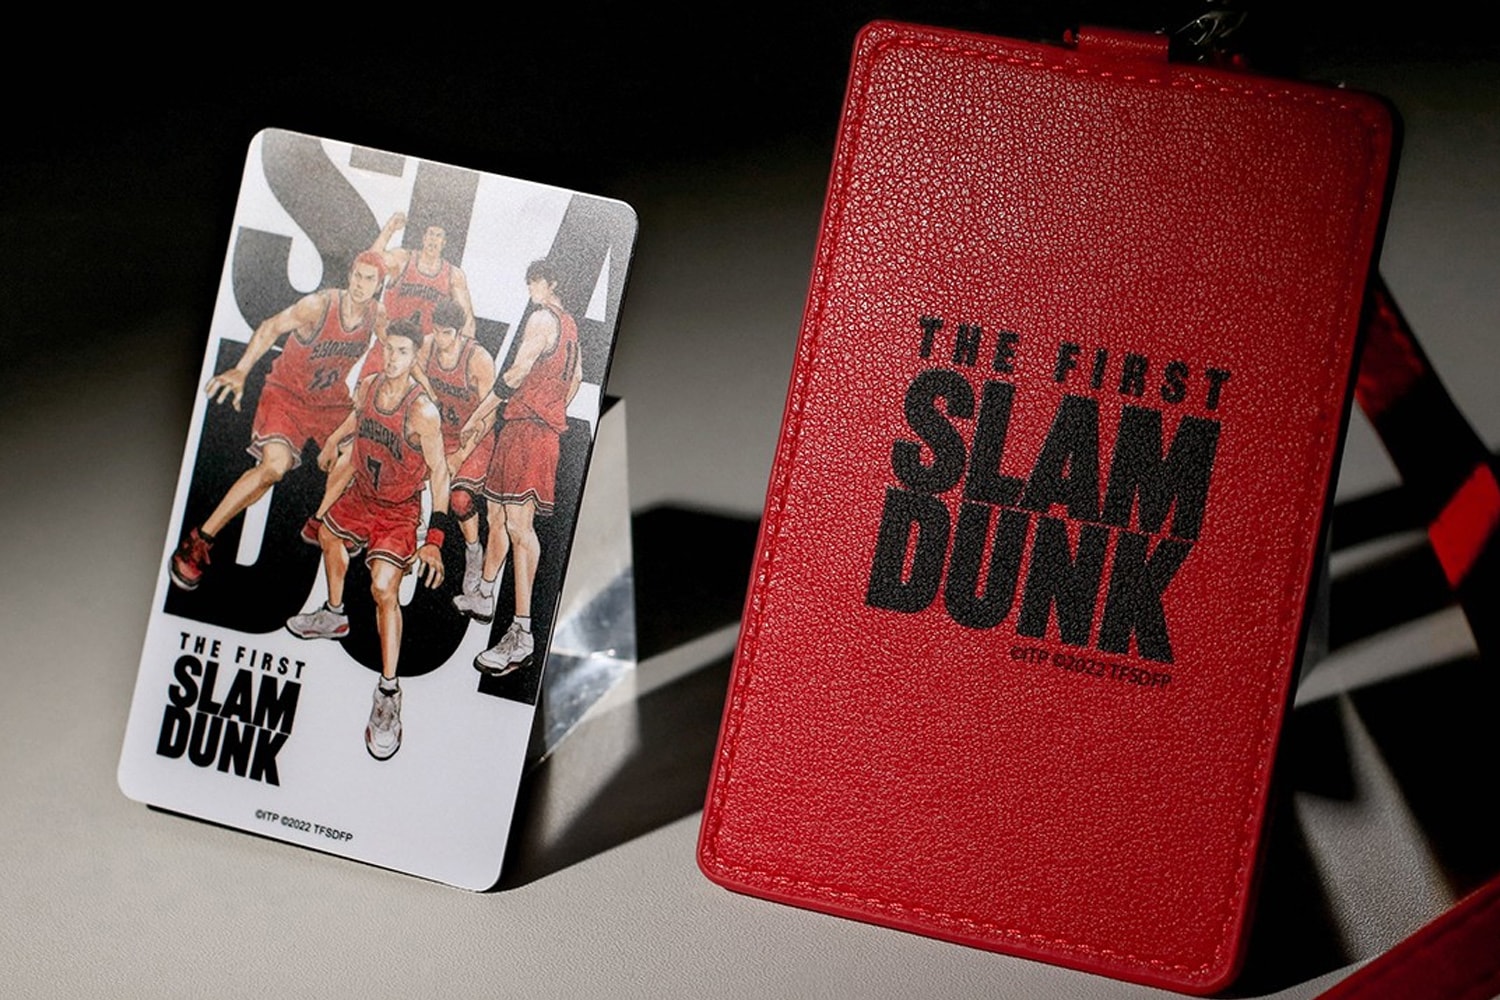 《THE FIRST SLAM DUNK》劇場版八達通卡紀念套裝正式開售